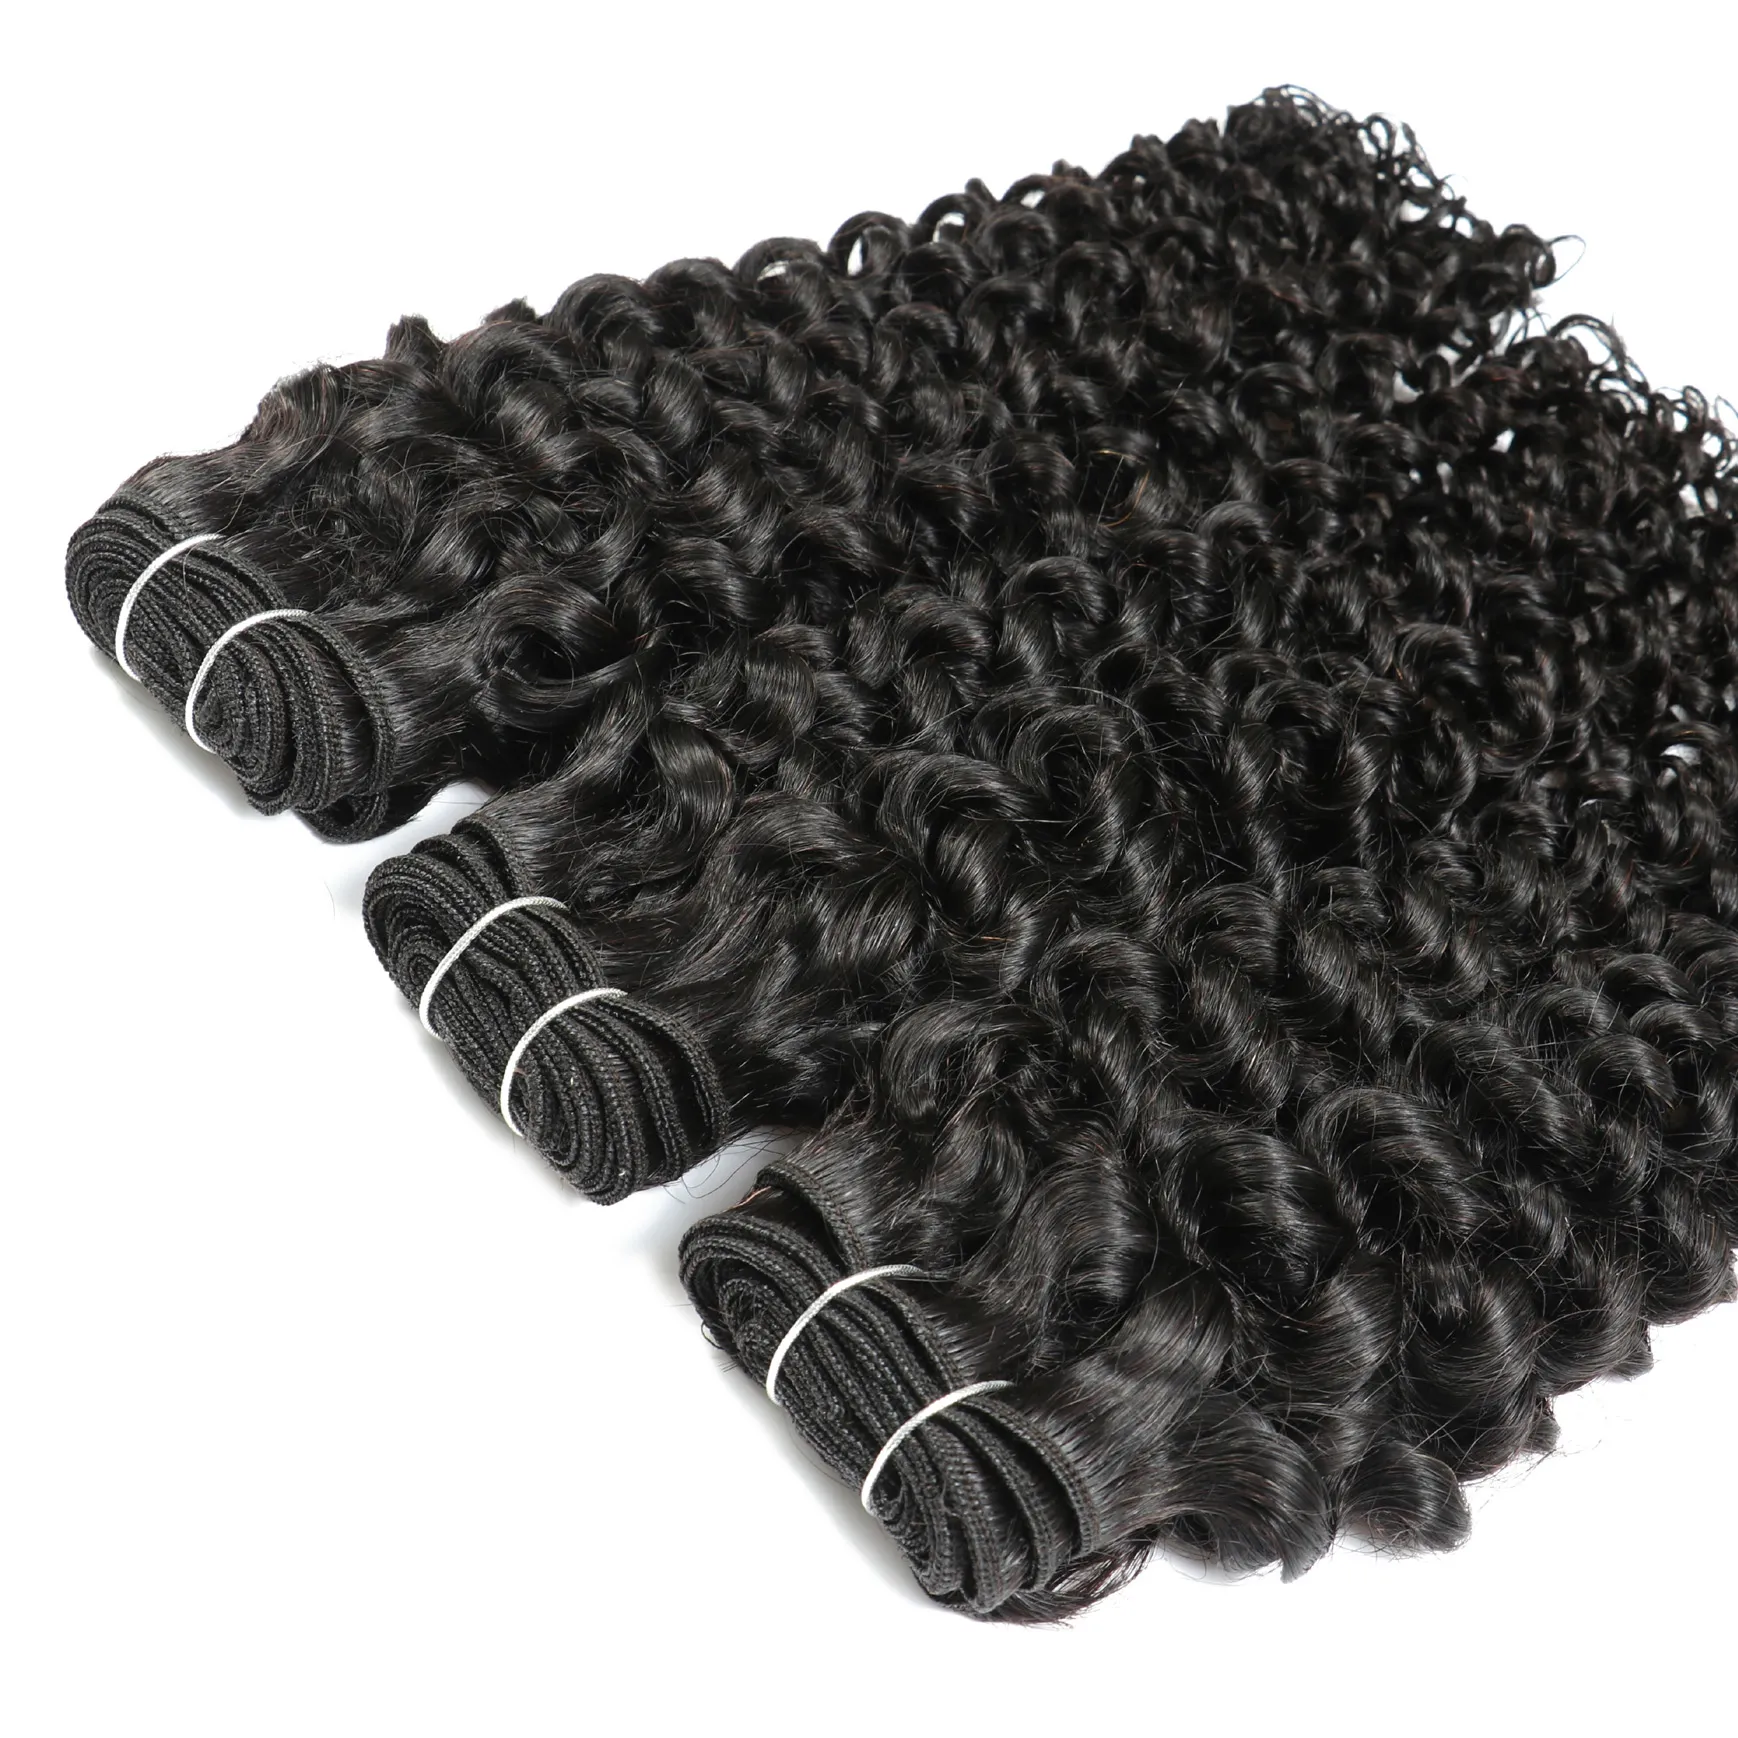 Hotsale styles weaves knot extension wholesale bundles xbl remy 10a mink vendor protein treatment virgin brazilian human hair